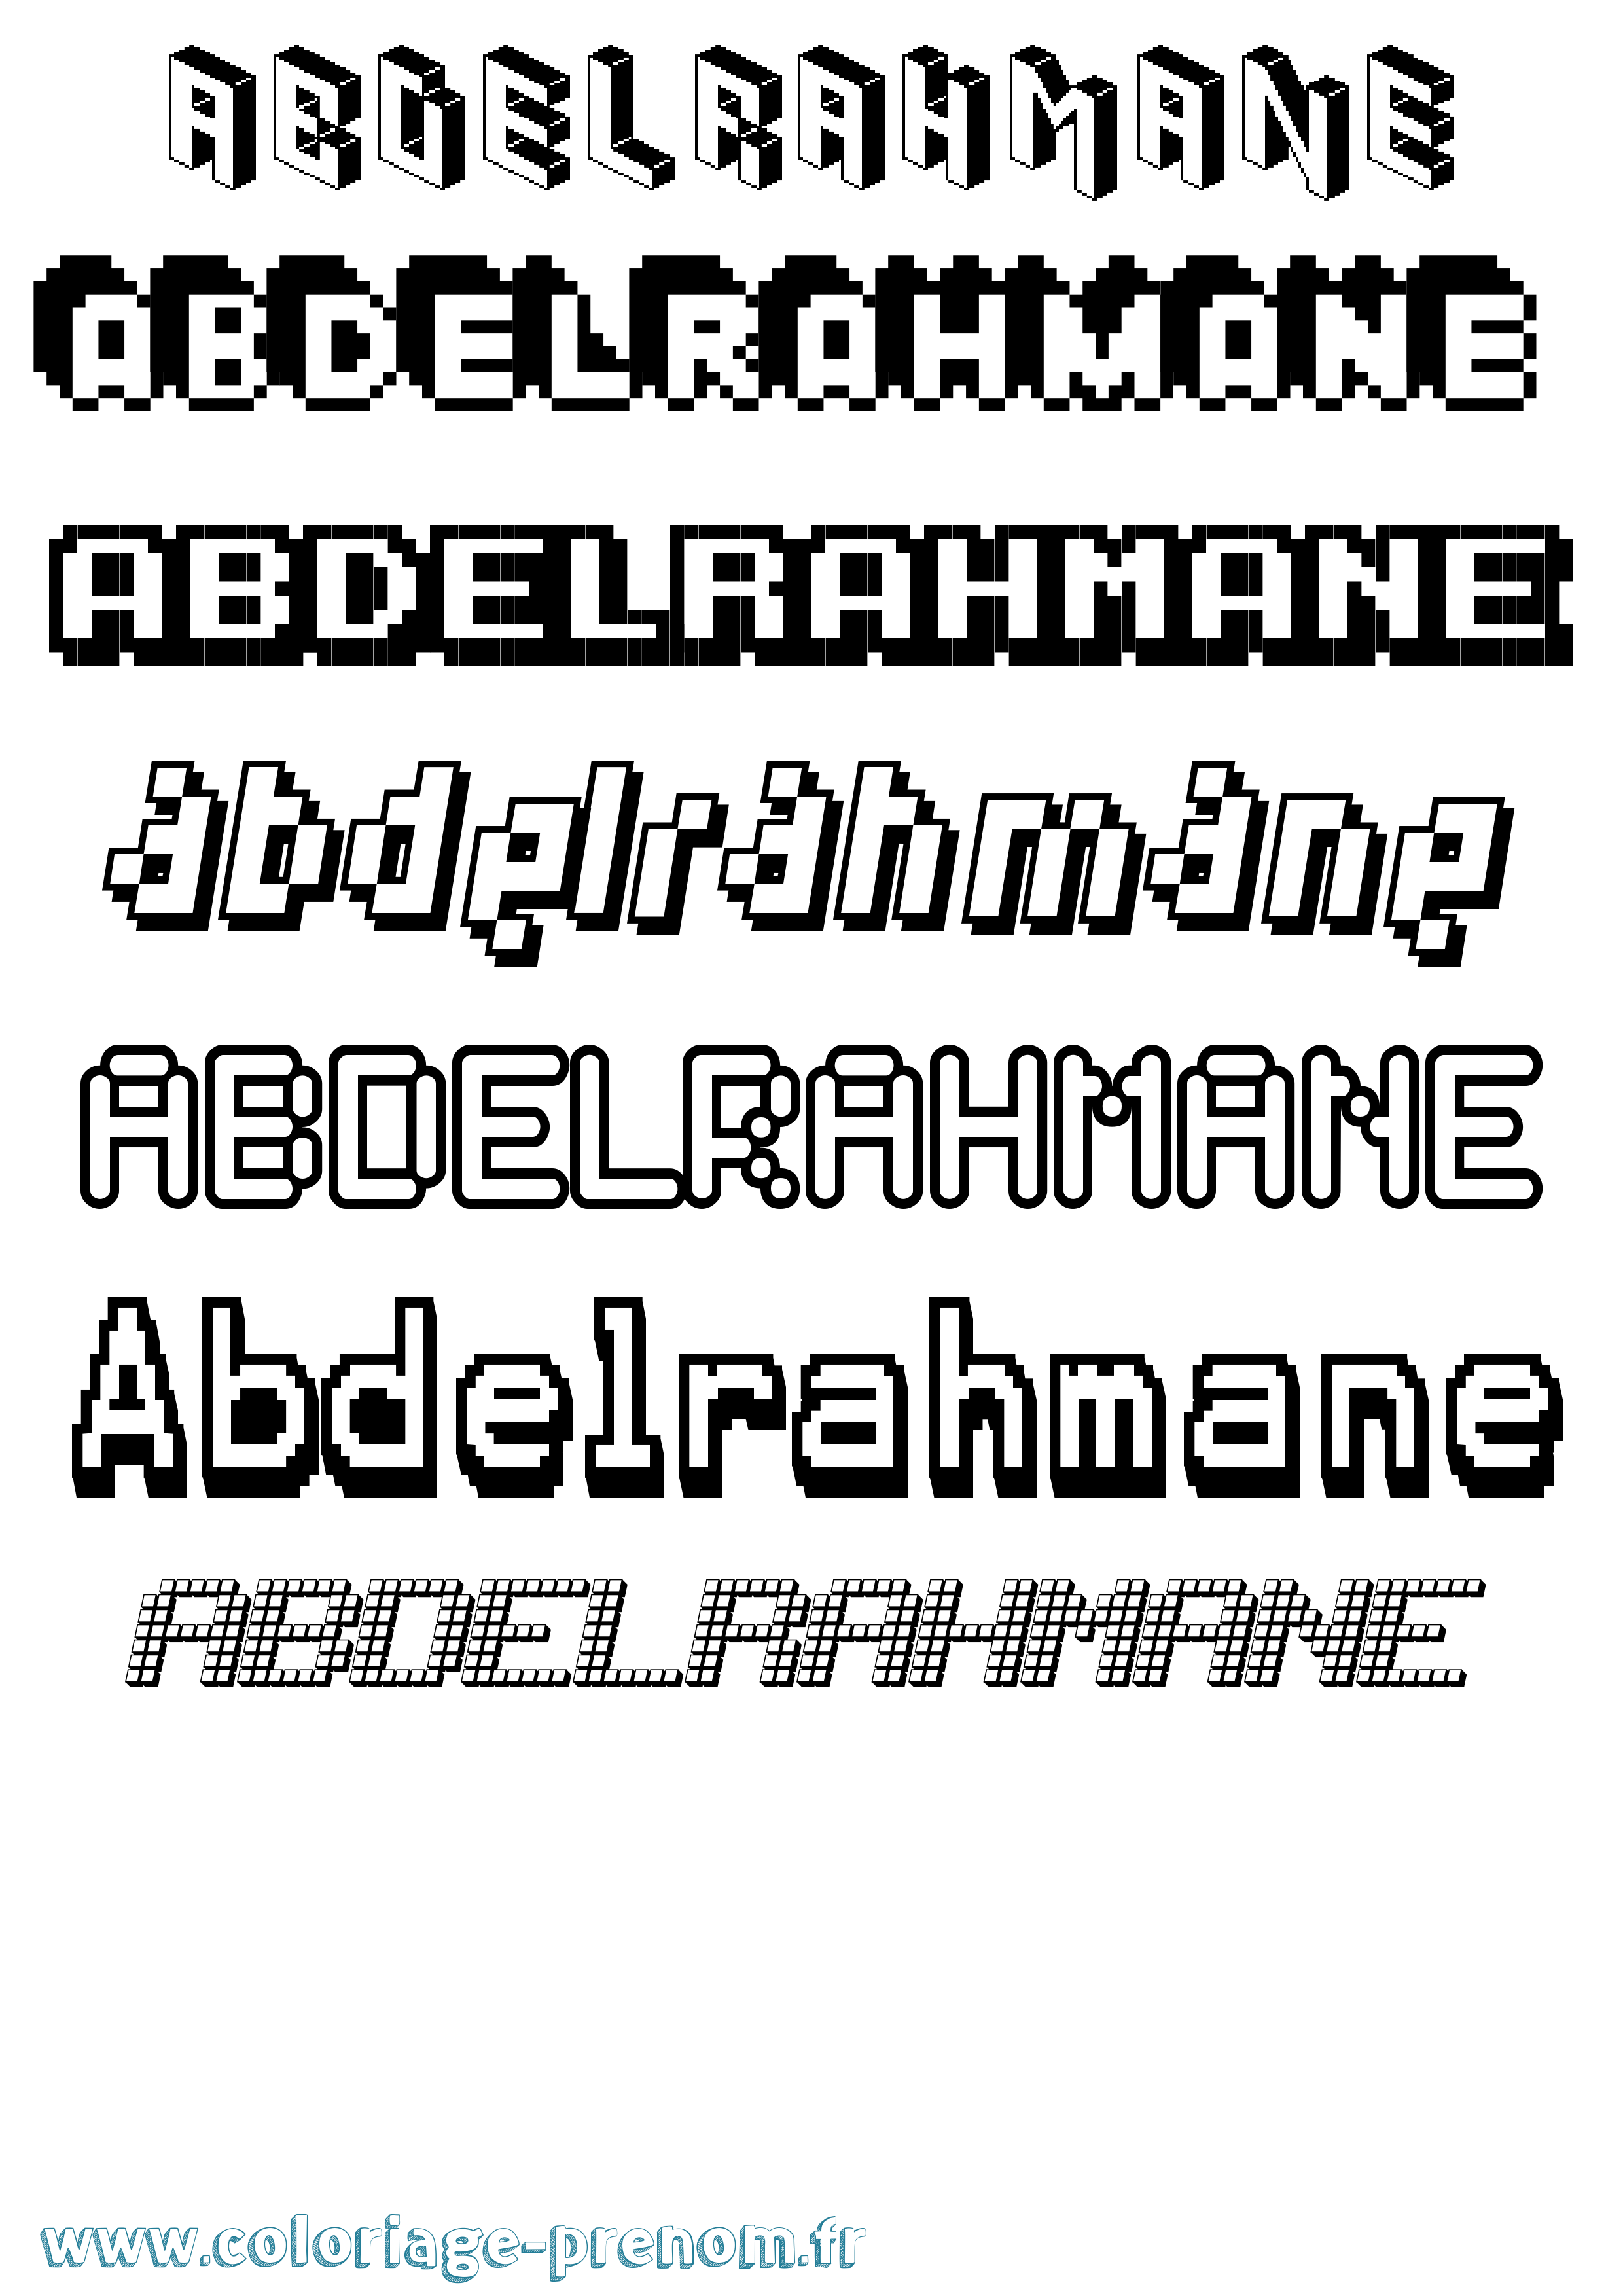 Coloriage prénom Abdelrahmane Pixel